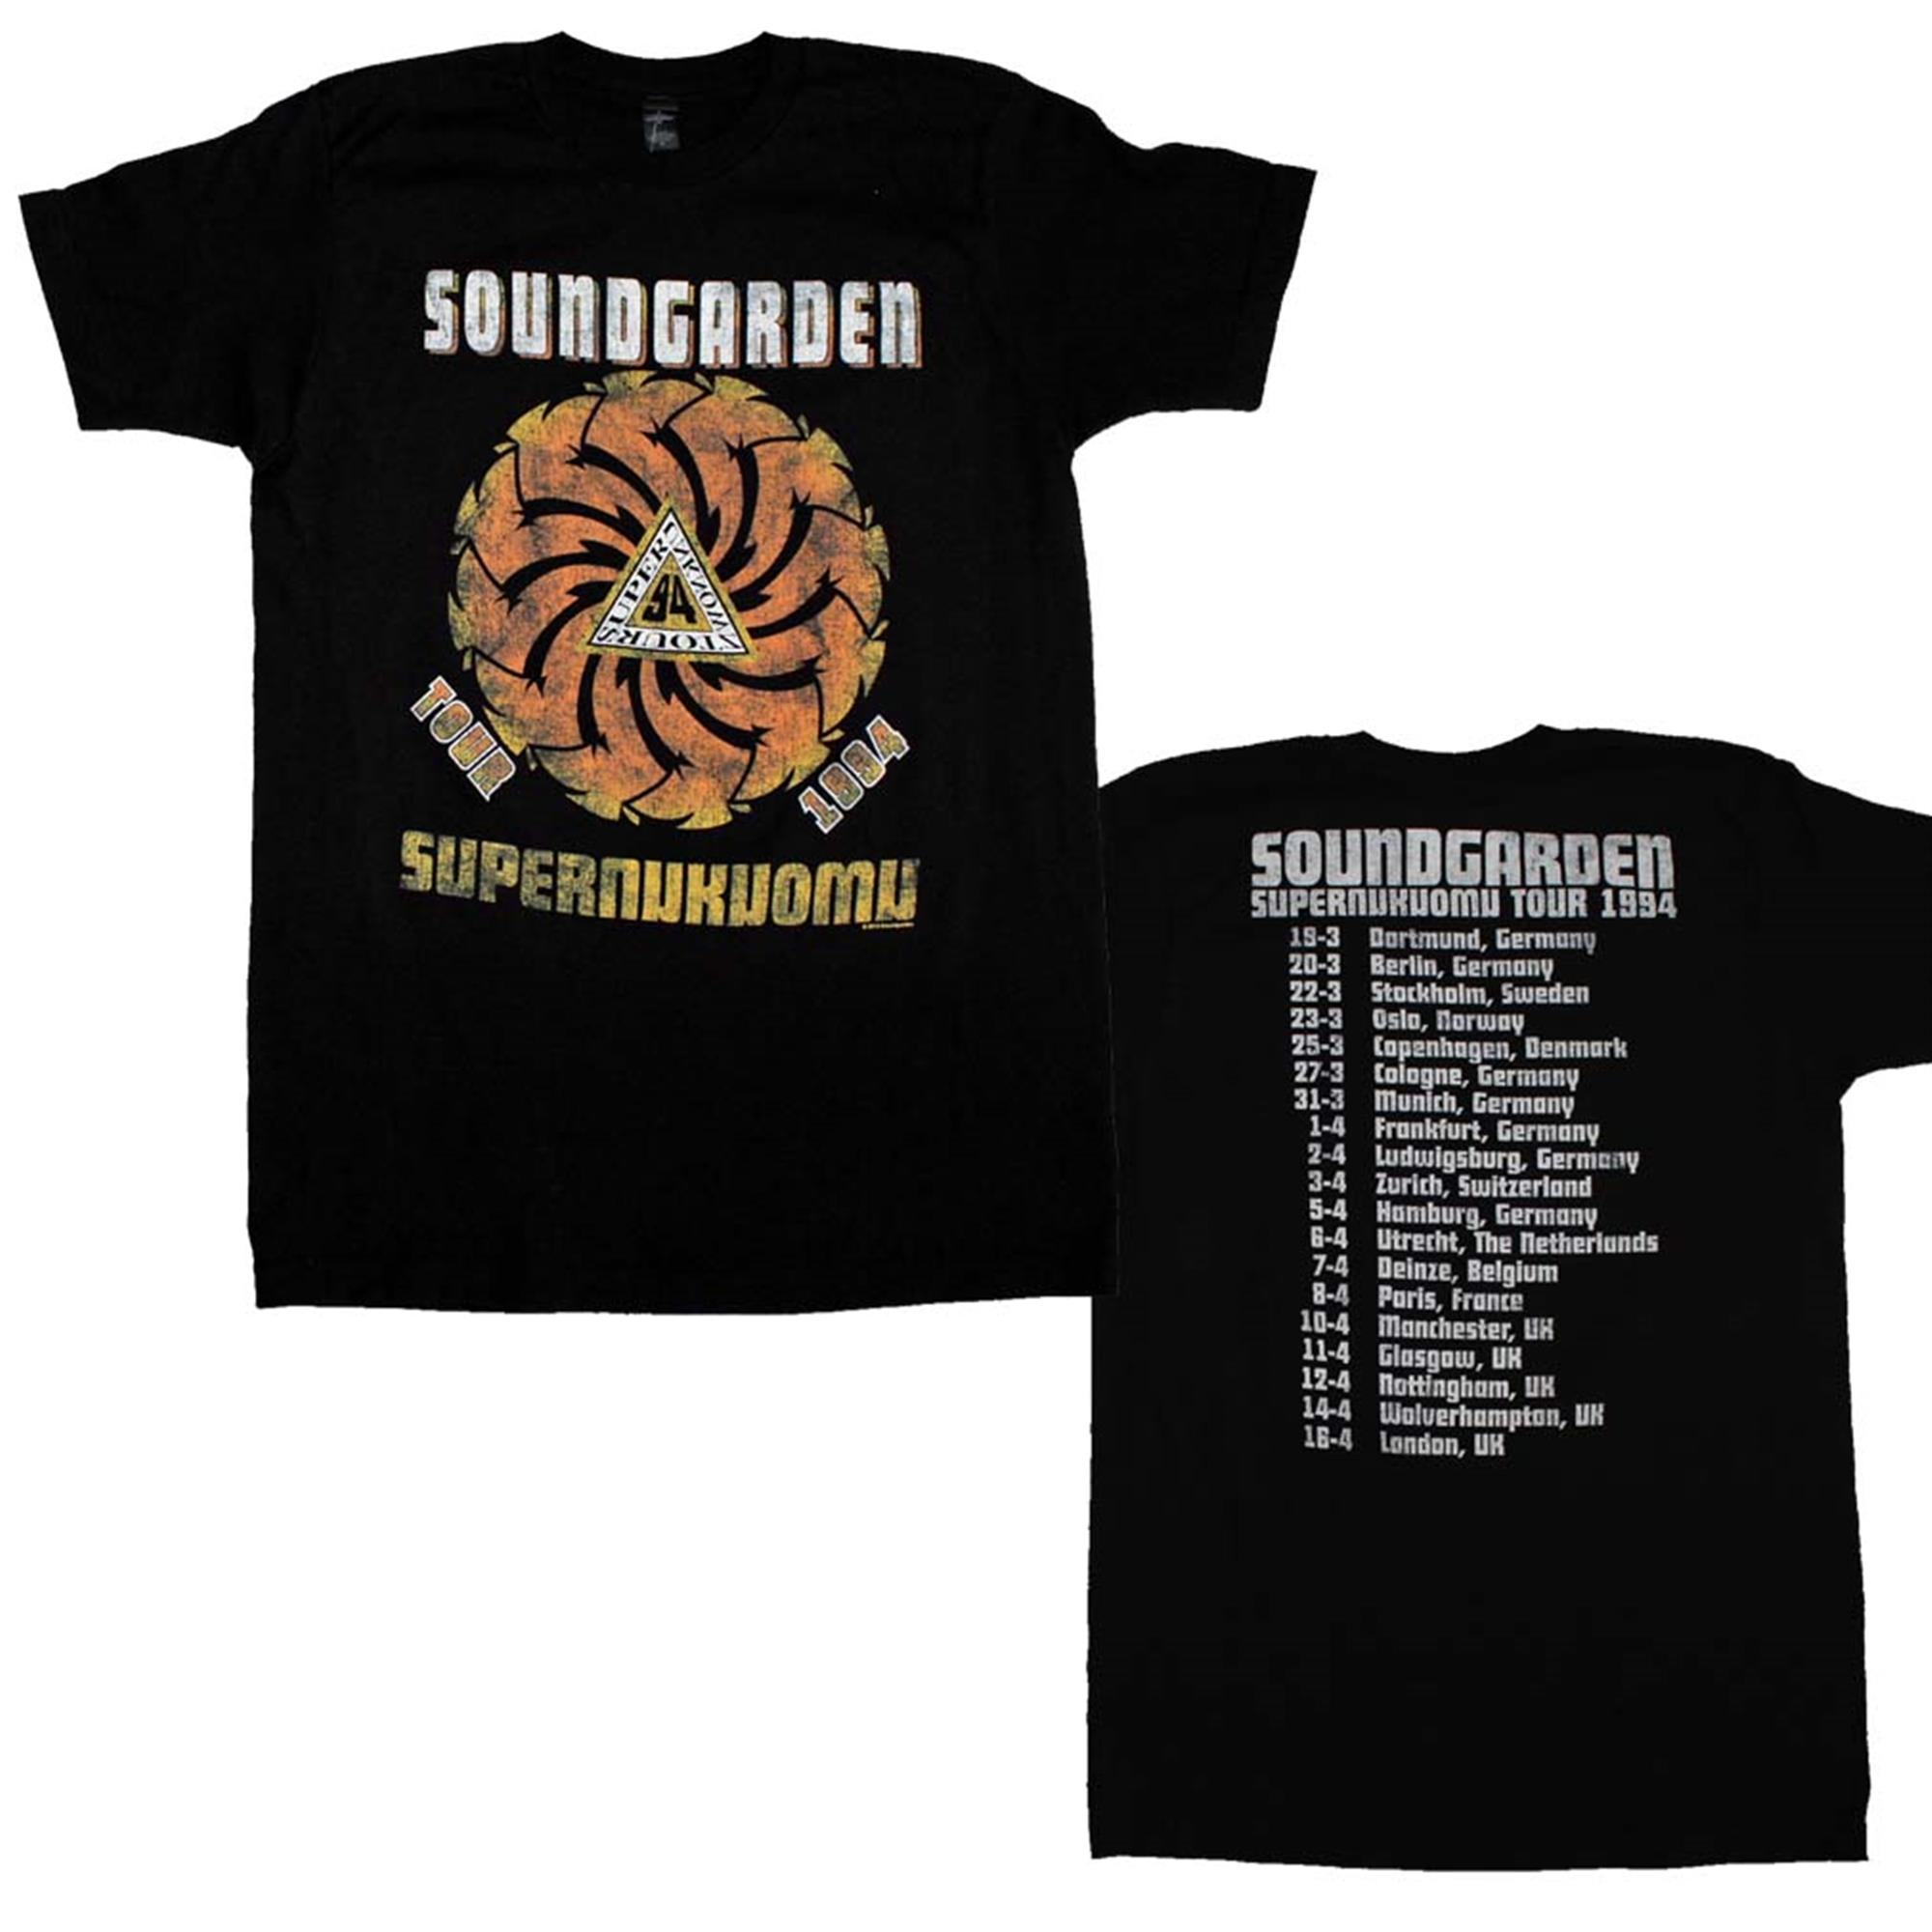 Soundgarden Superunkown Tour 94 Soft T-Shirt